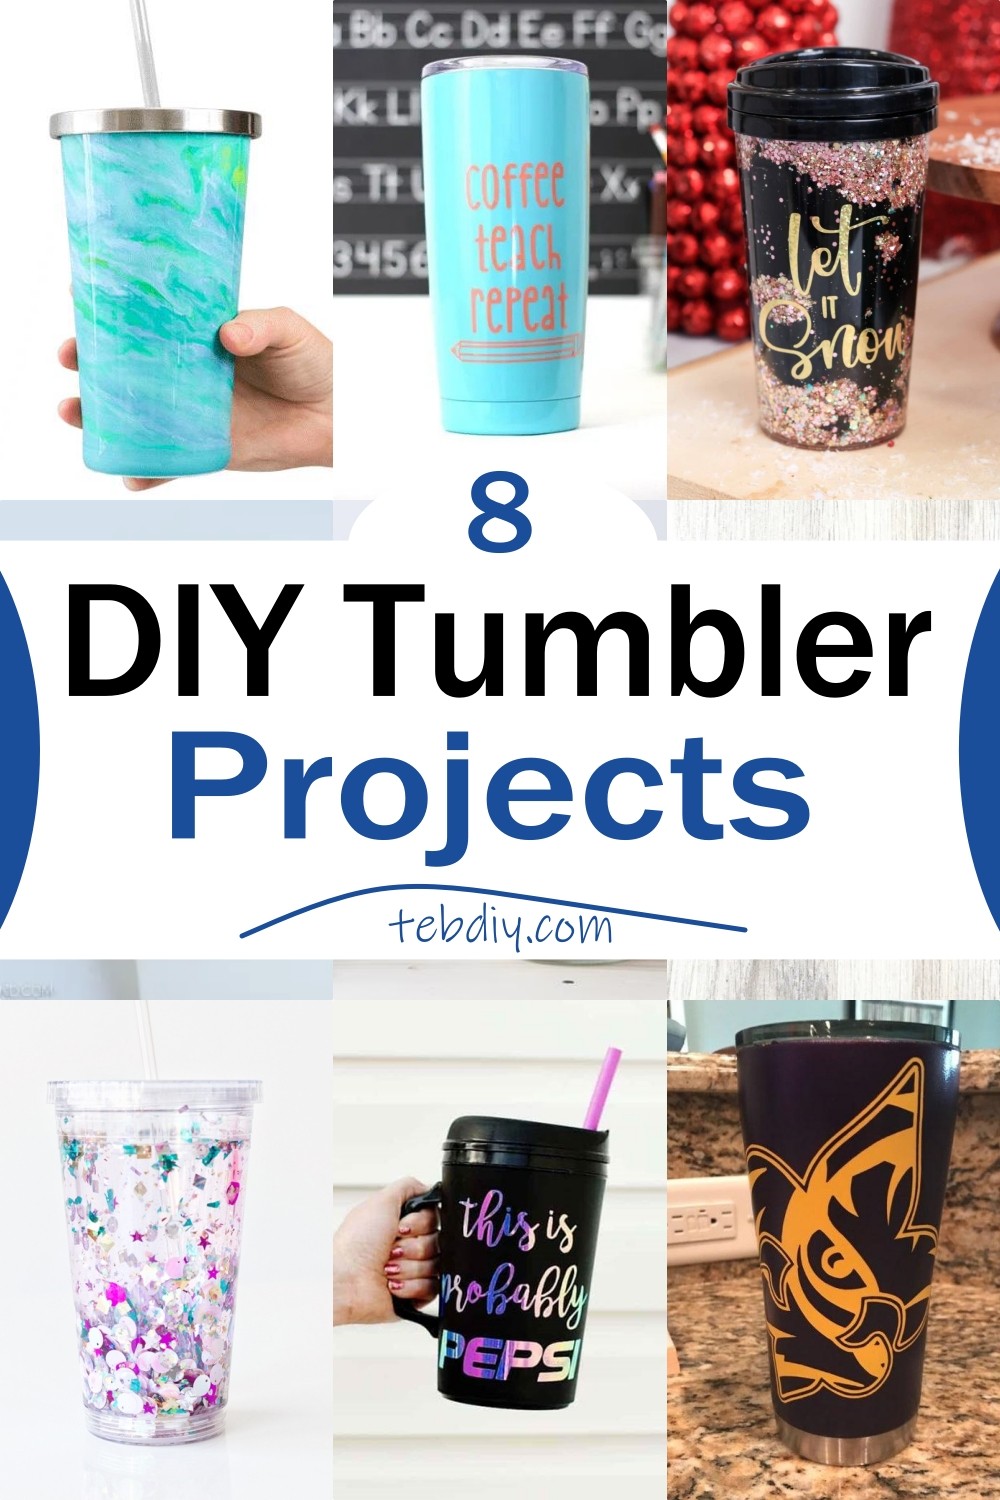 DIY Tumbler Projects